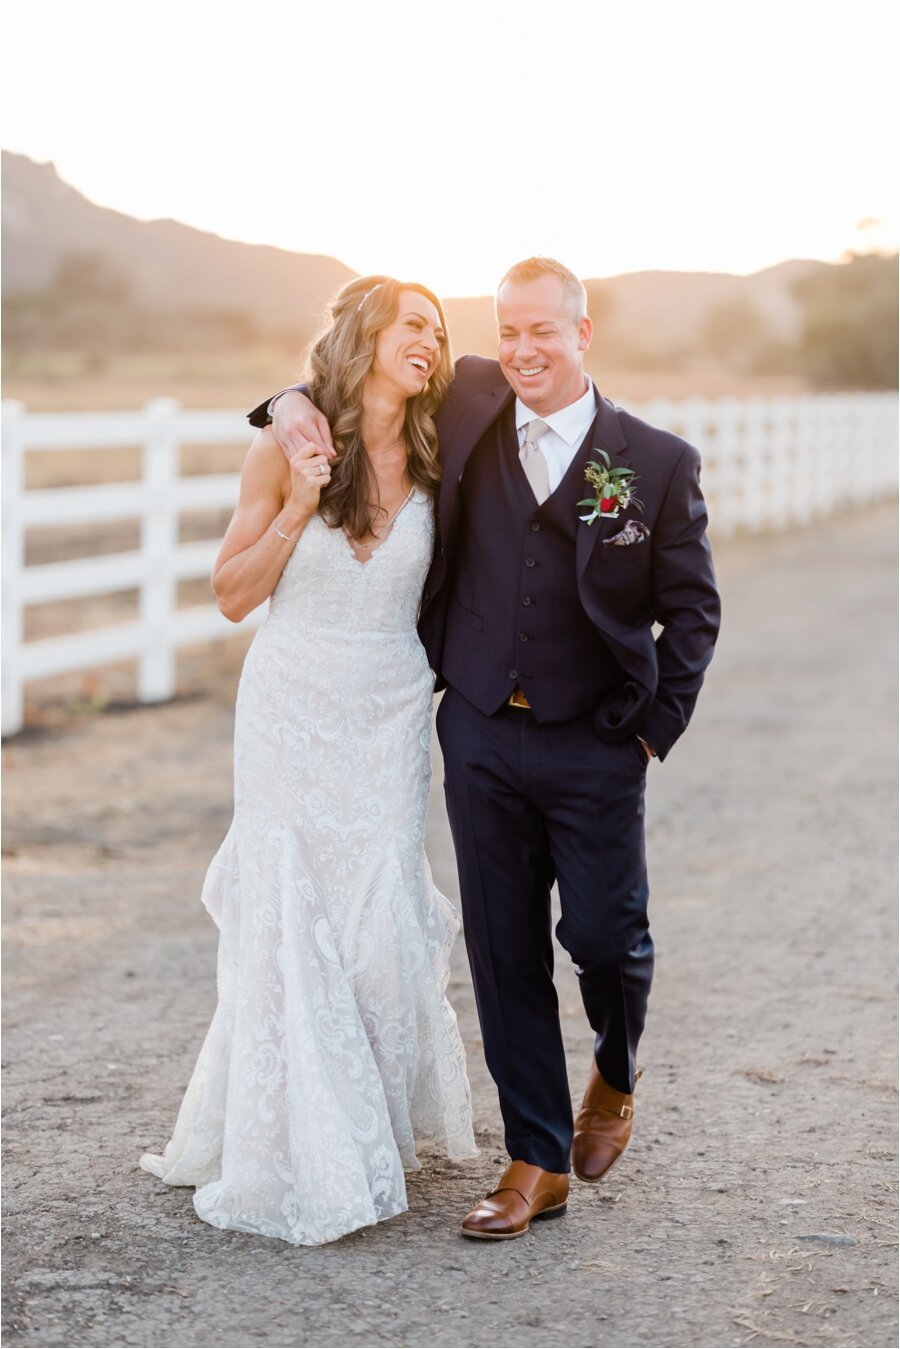 Bride and groom sunset portrait